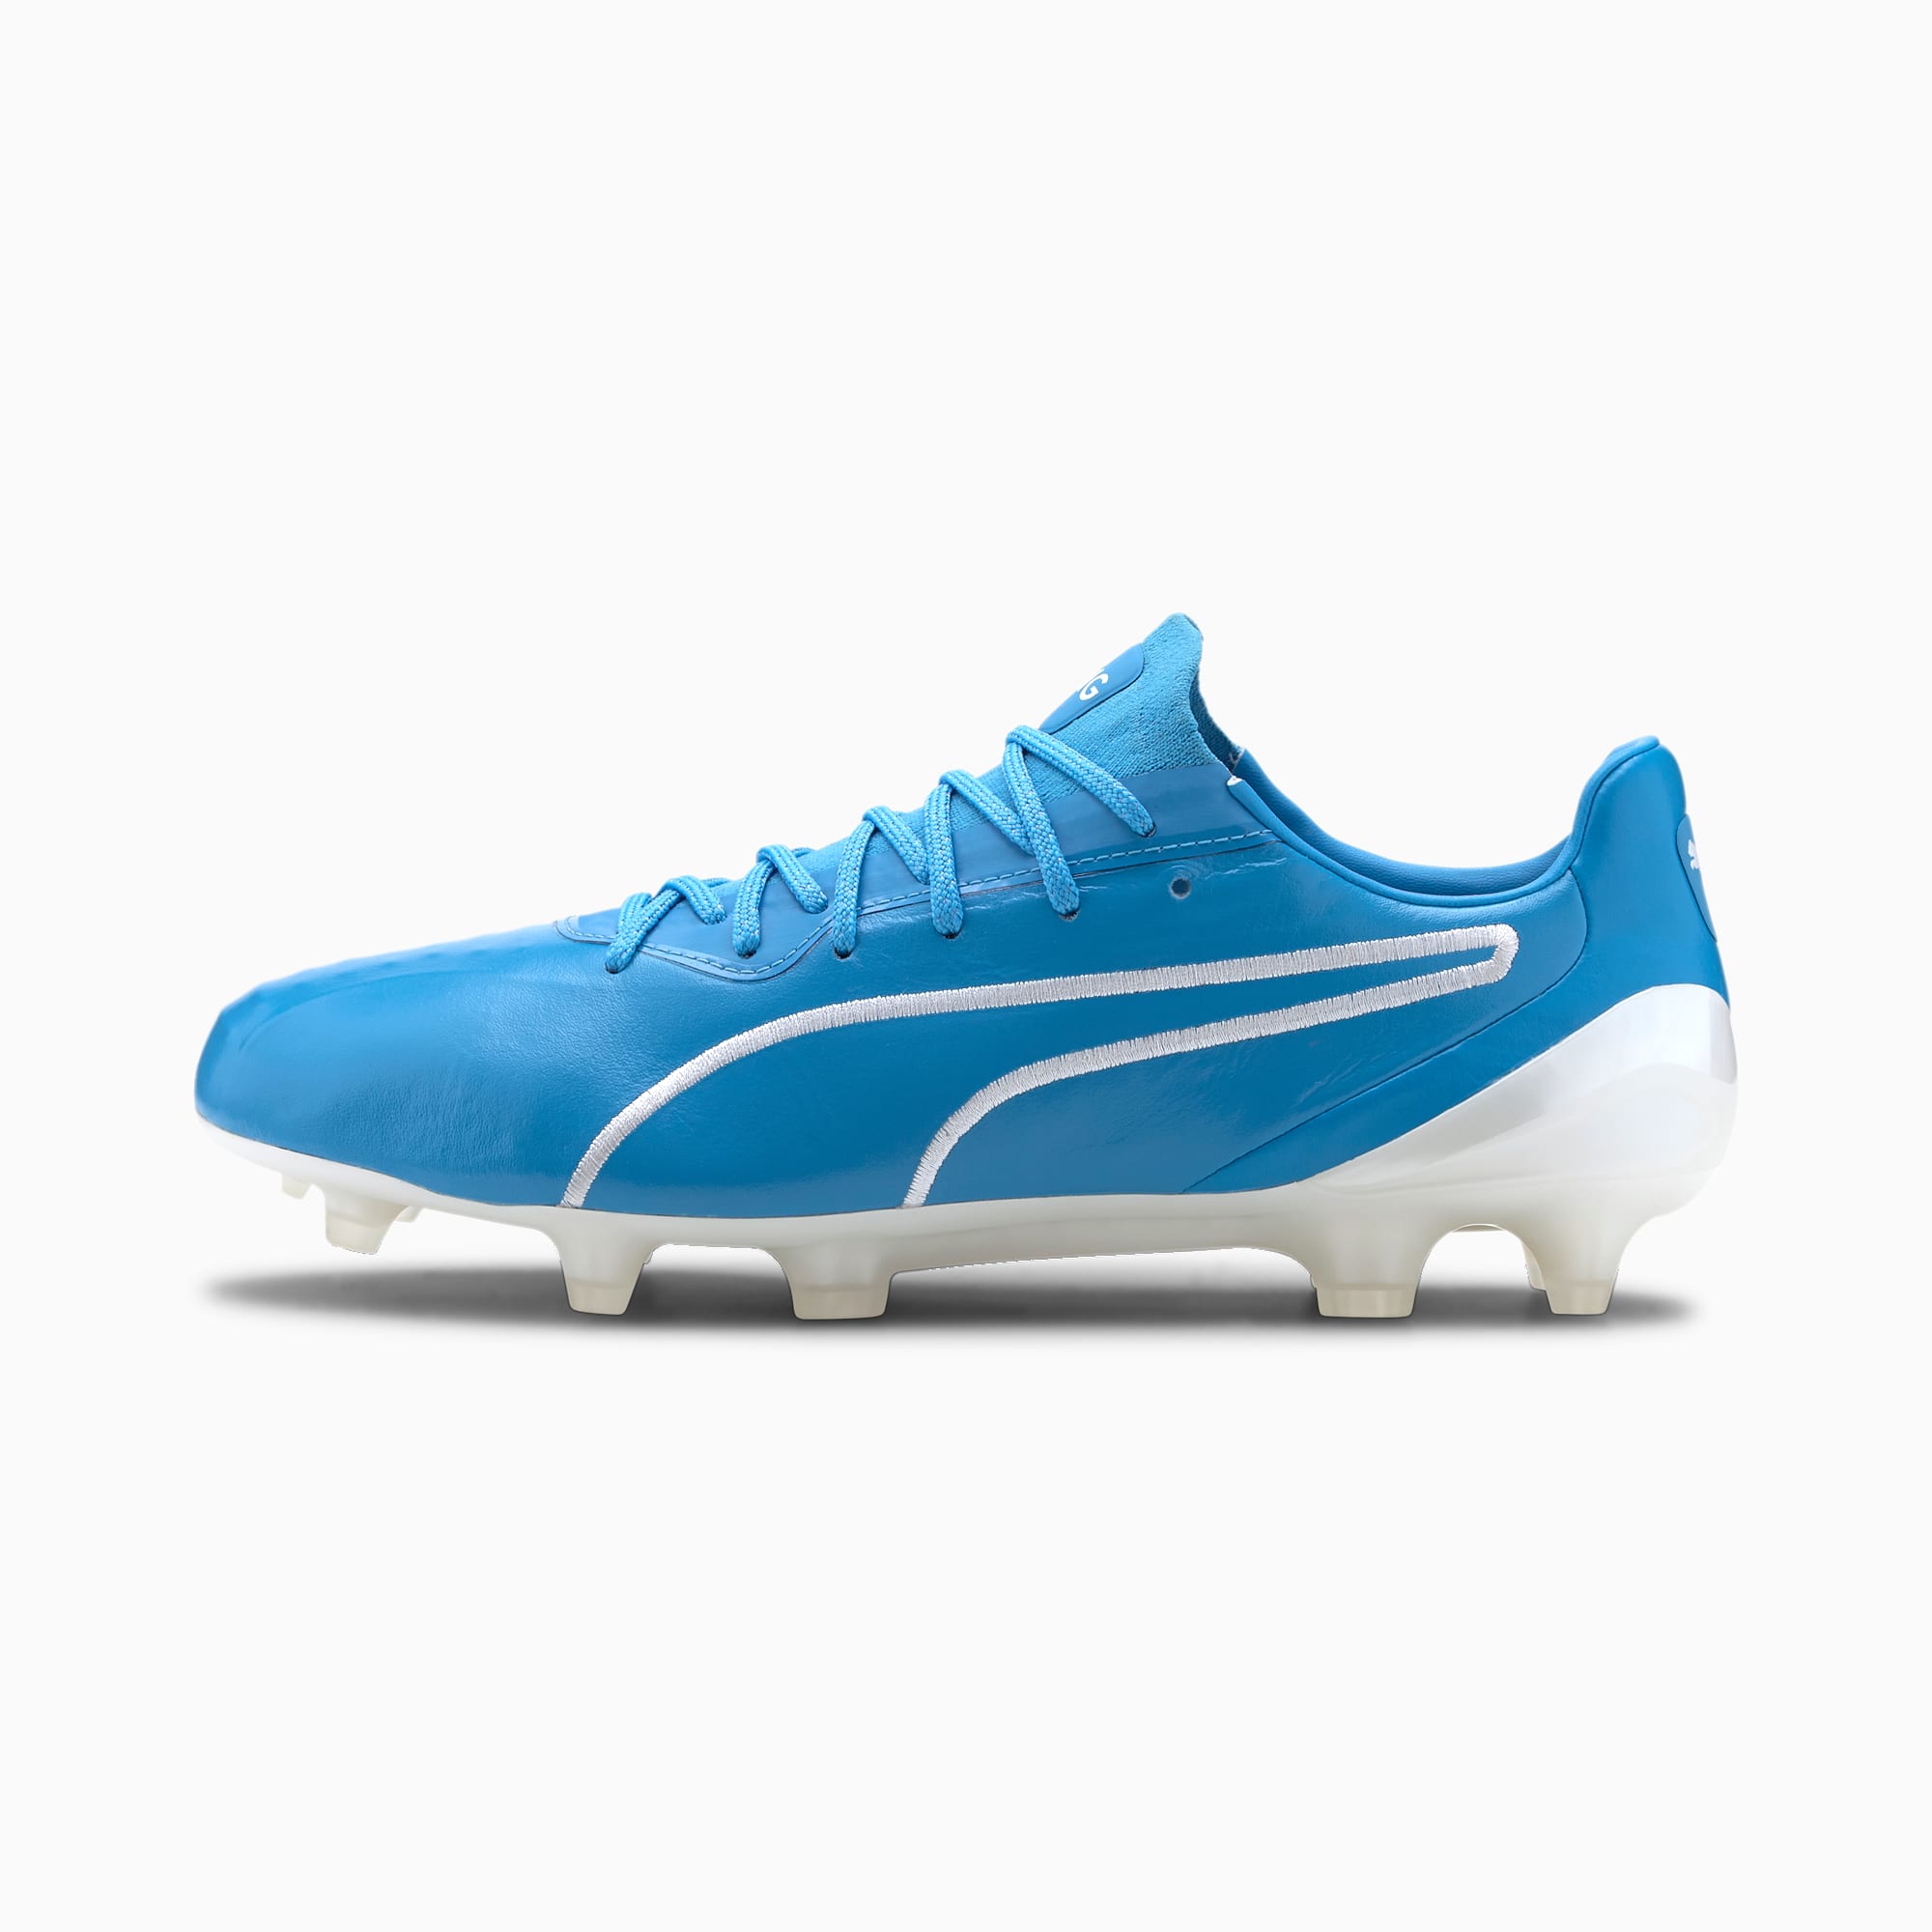 King Platinum Men S Fg Agfootball Boots Luminous Blue Puma White